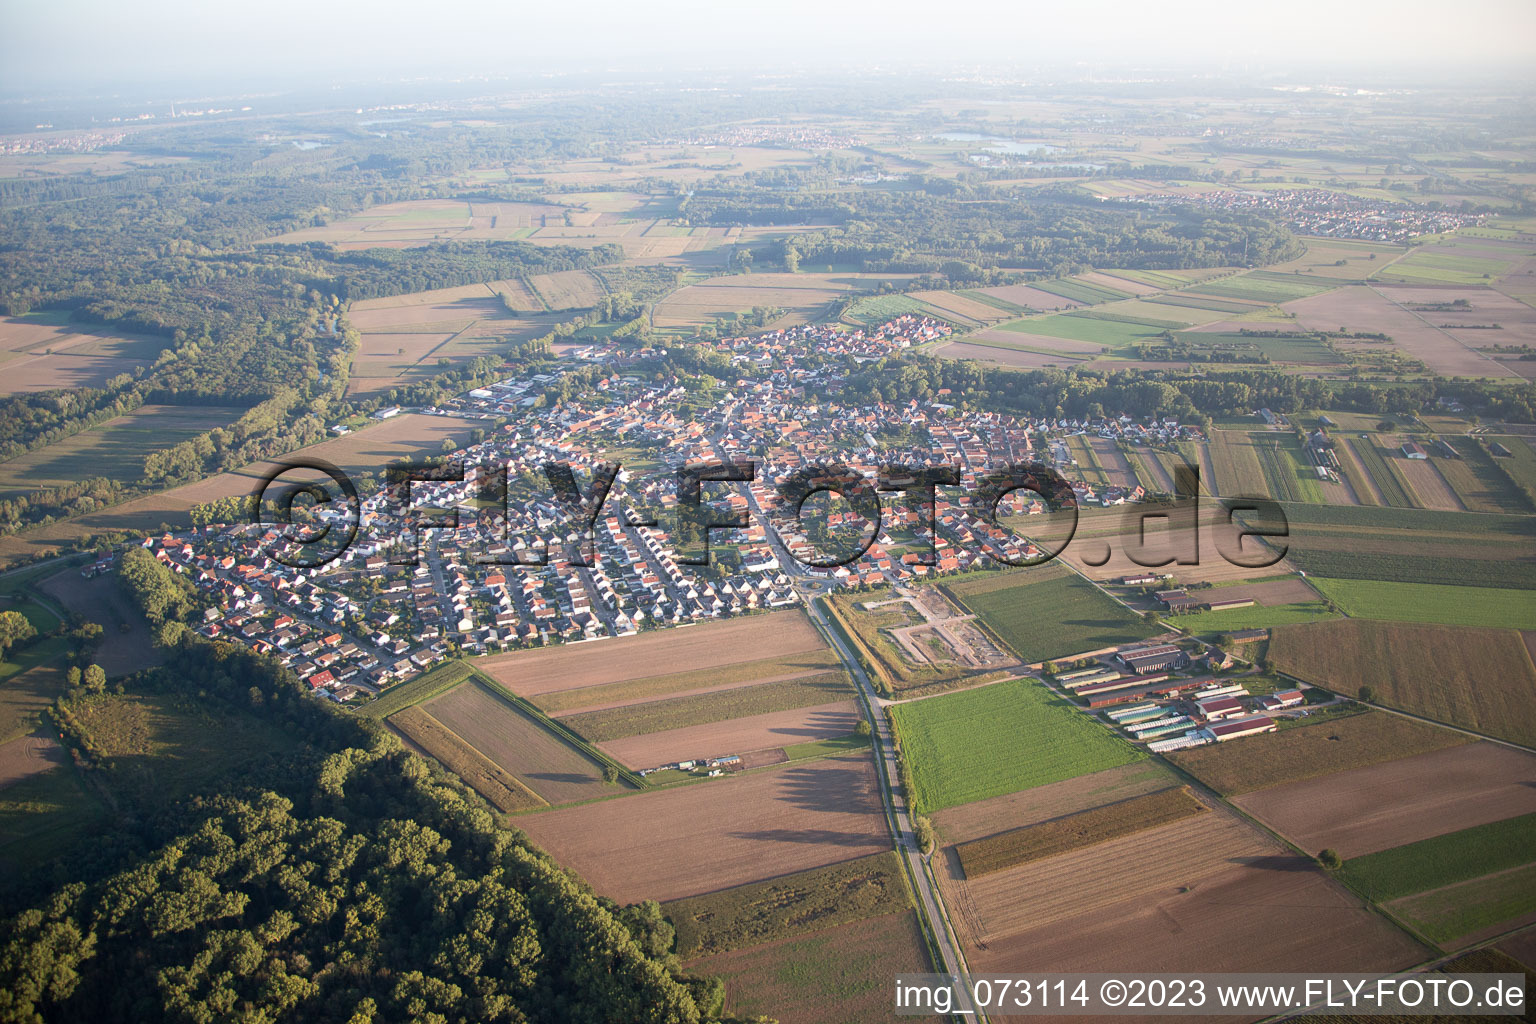 Kuhardt in the state Rhineland-Palatinate, Germany